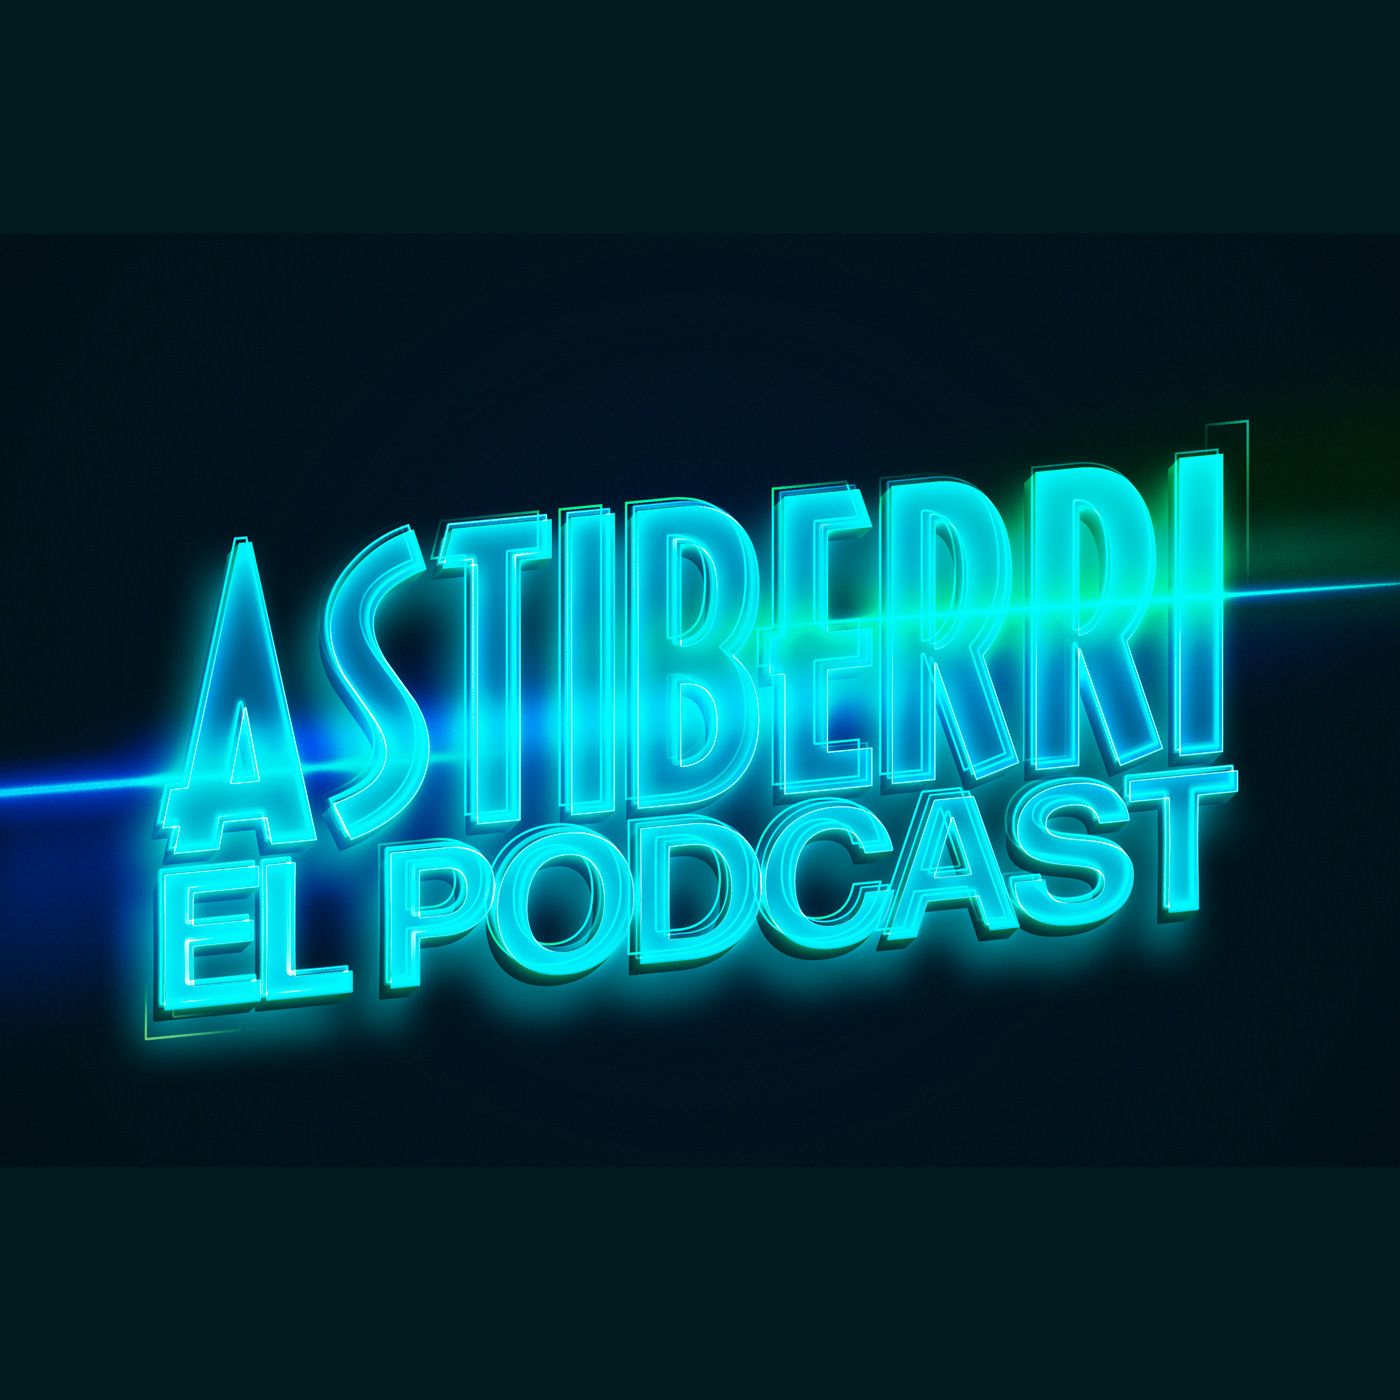 Astiberri Podcast